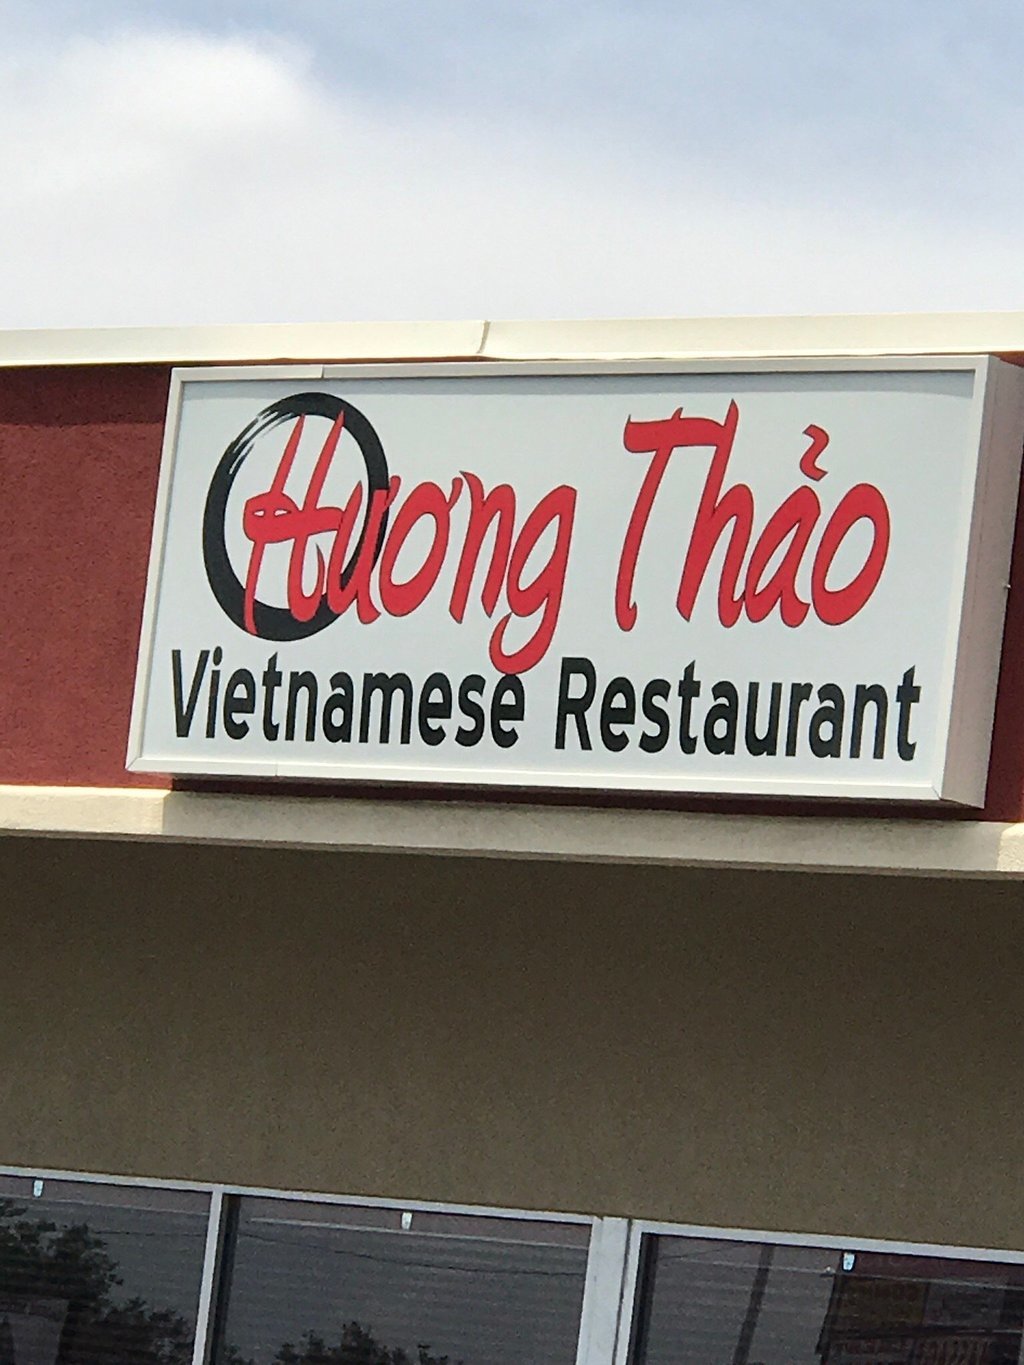 Huong tdao Vietnamese Cuisine